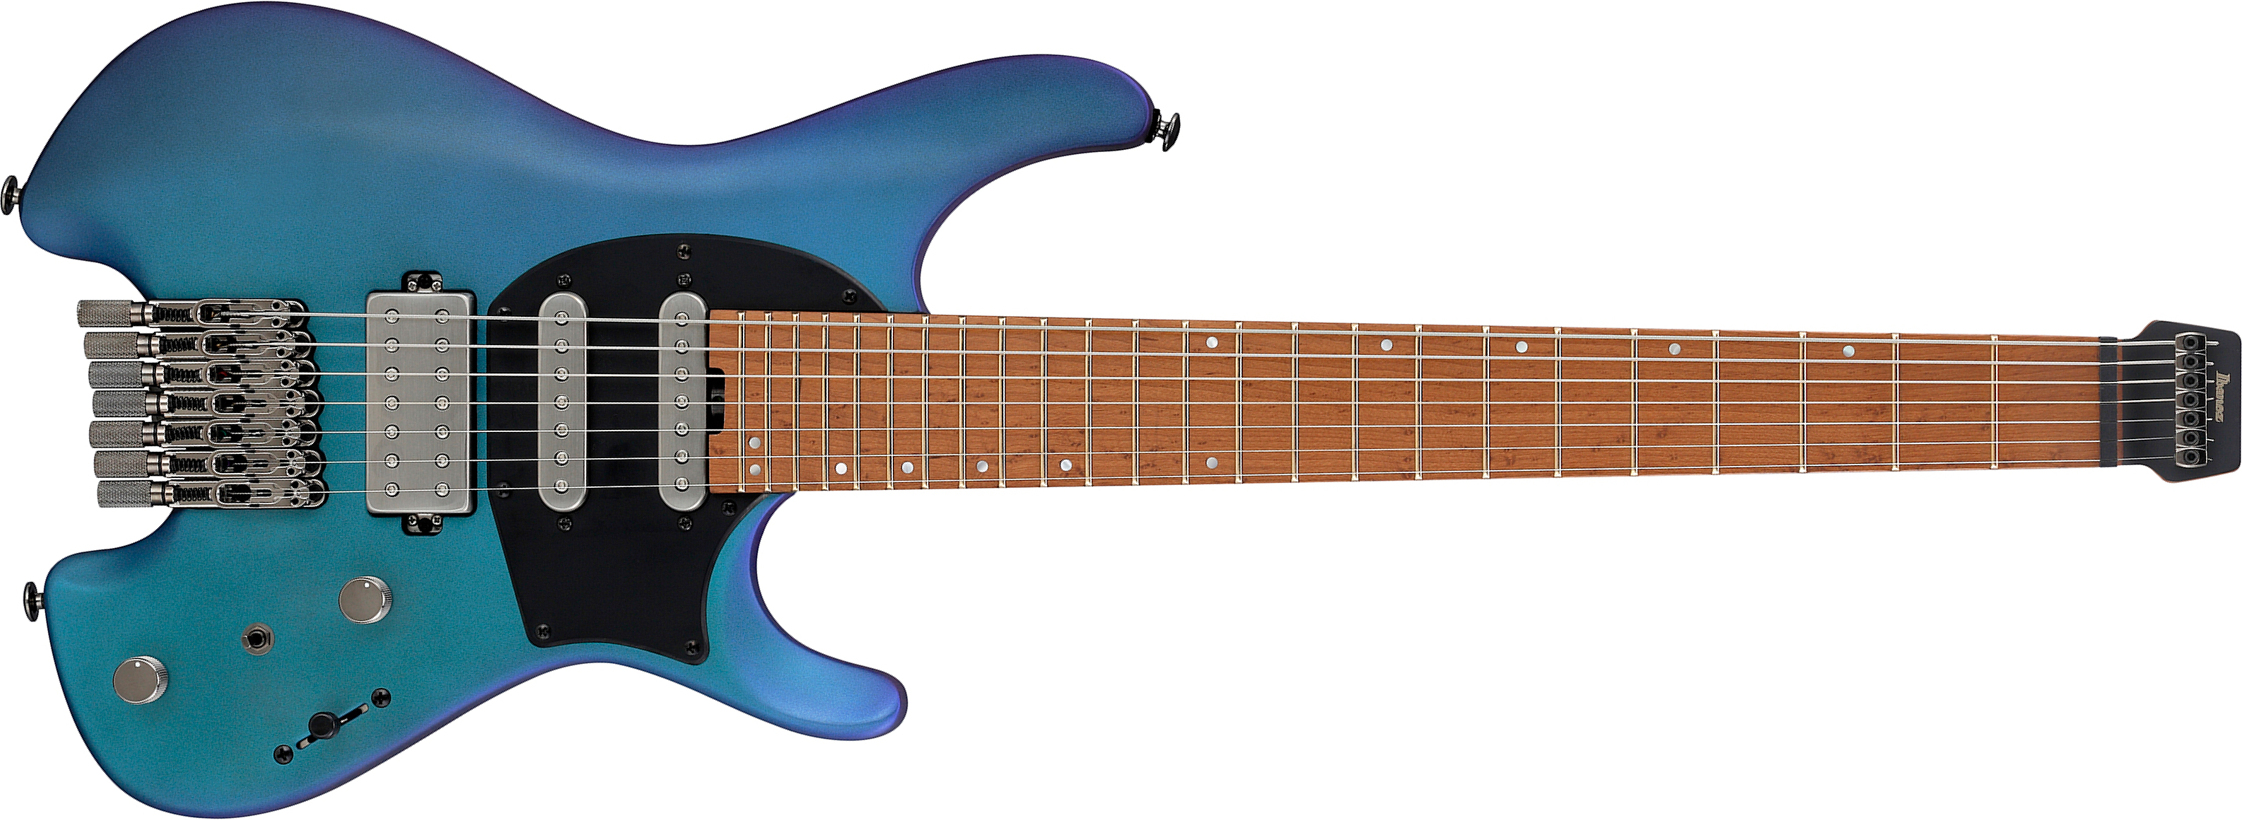 Ibanez Q547 Bmm Quest 7c Hss Ht Mn - Blue Chameleon Metallic Matte - 7 string electric guitar - Main picture